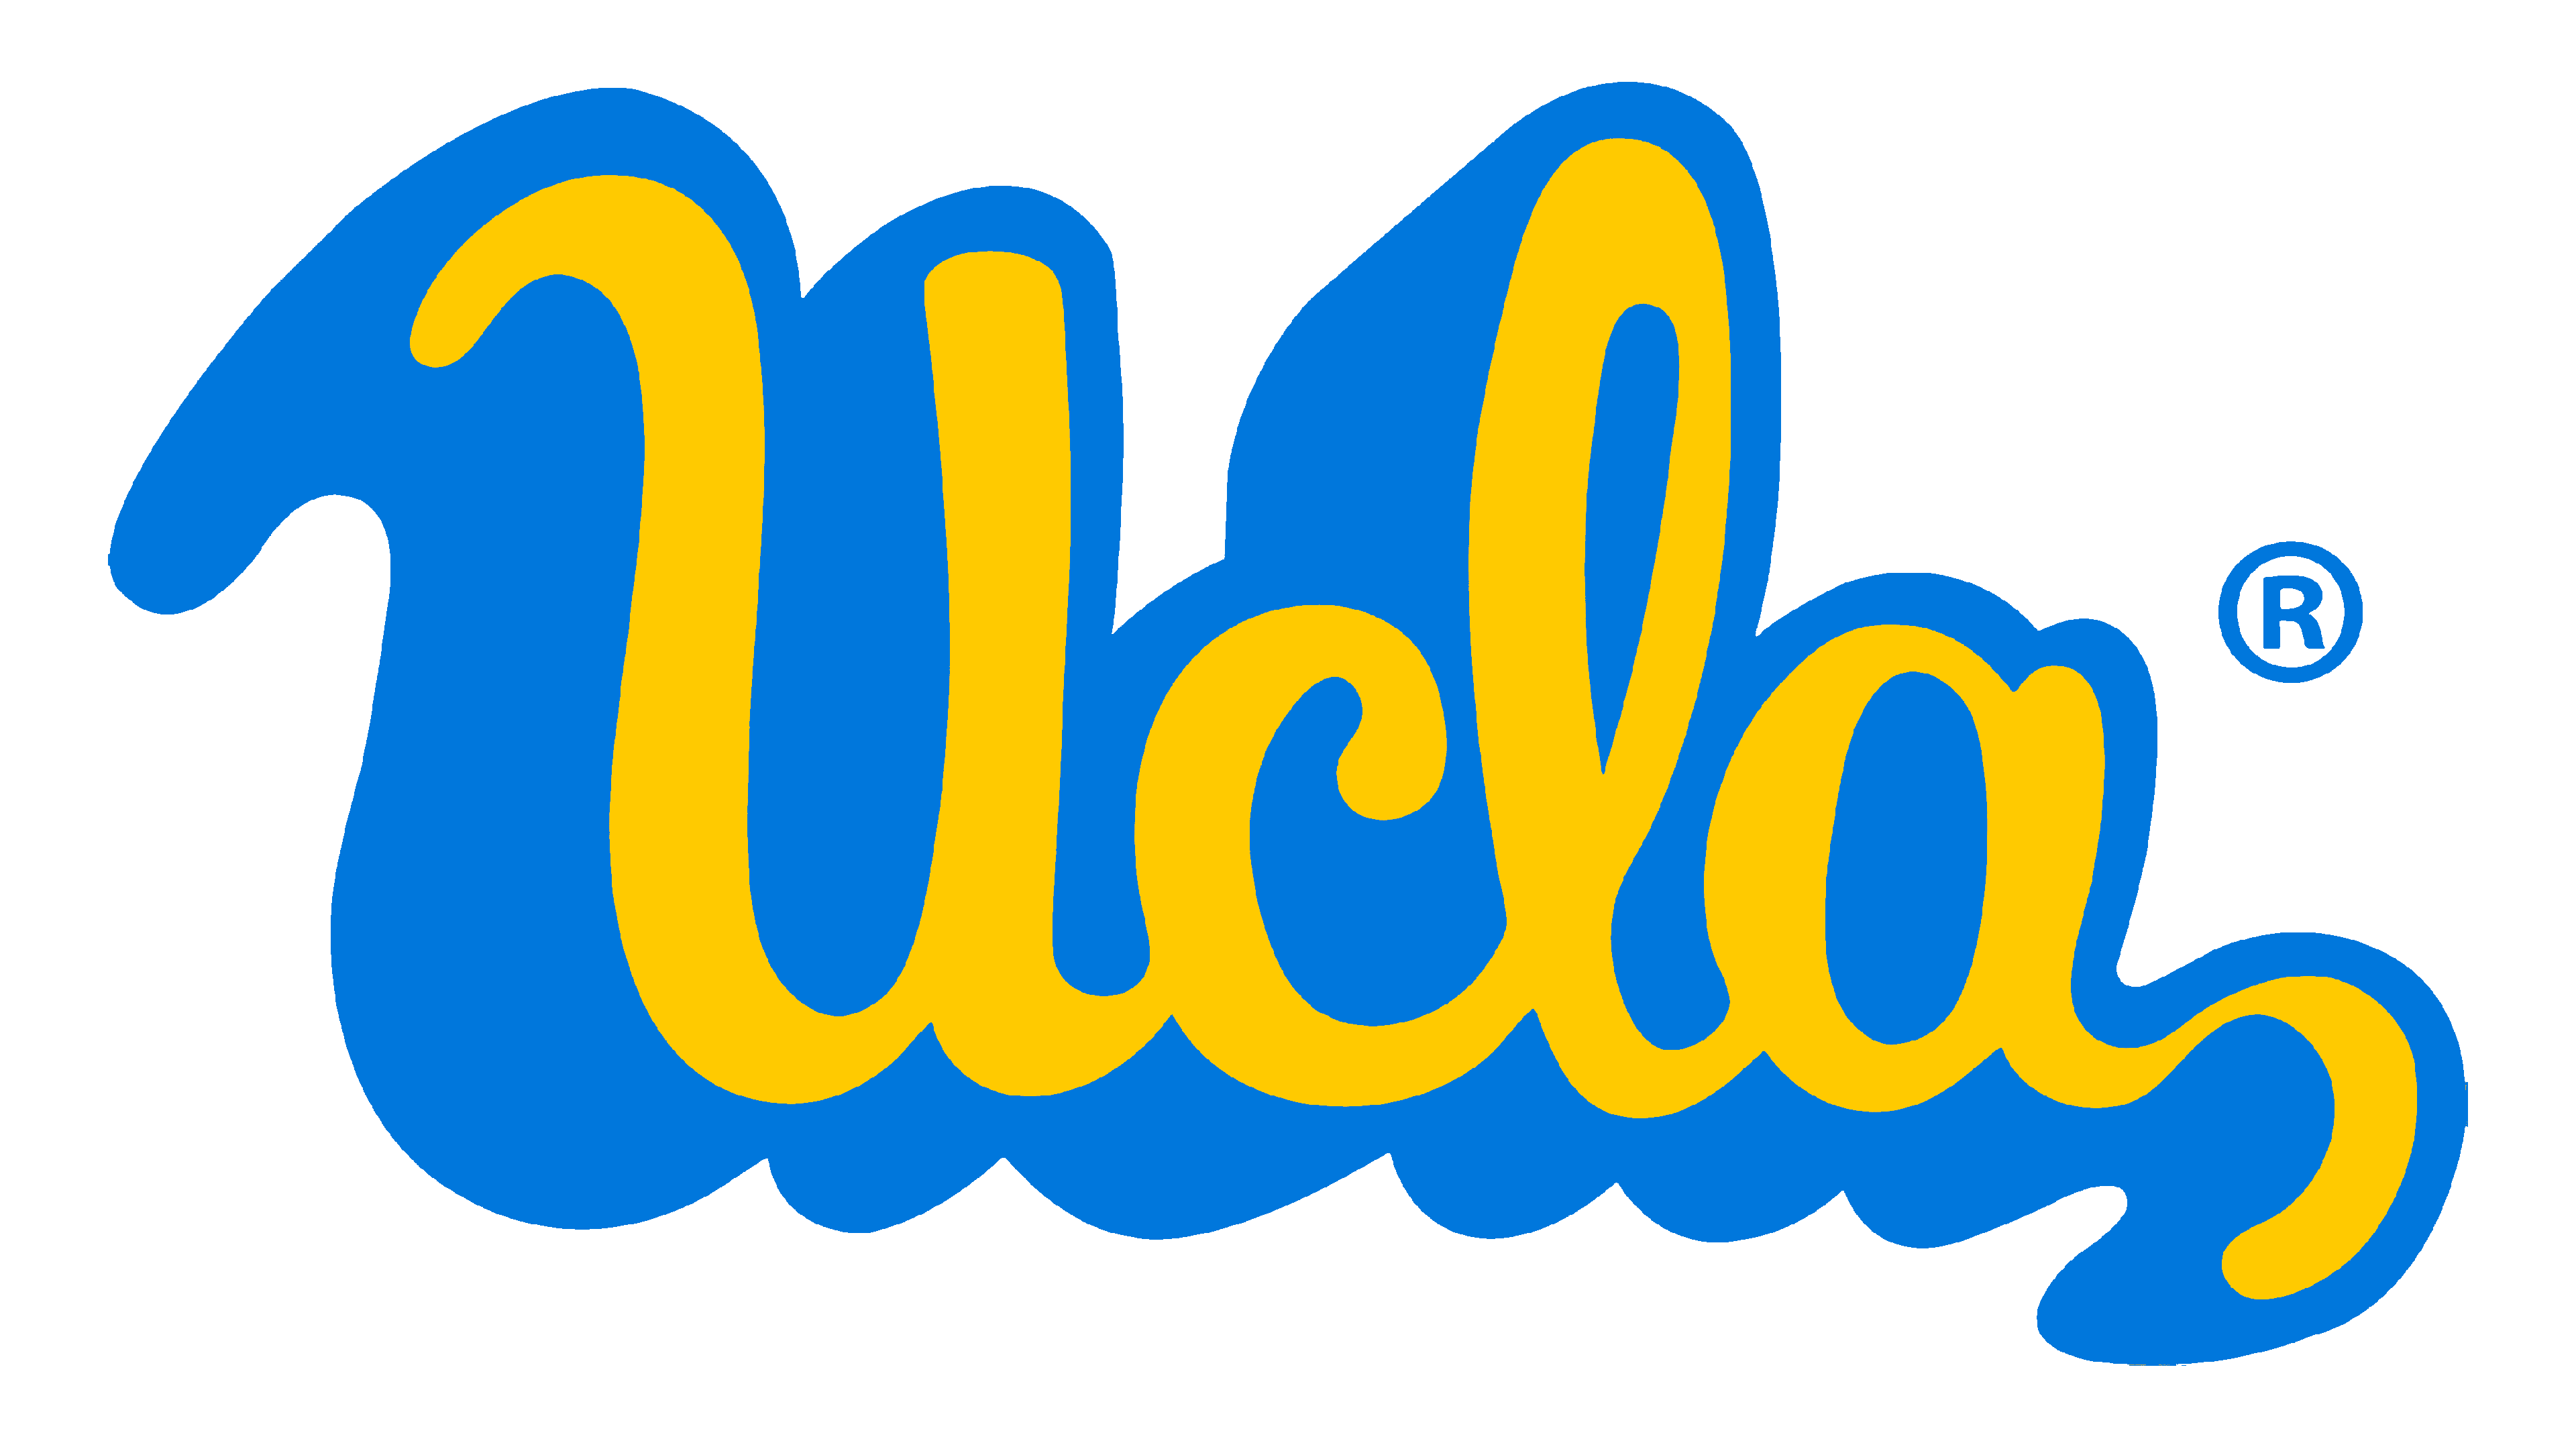 ucla official logo